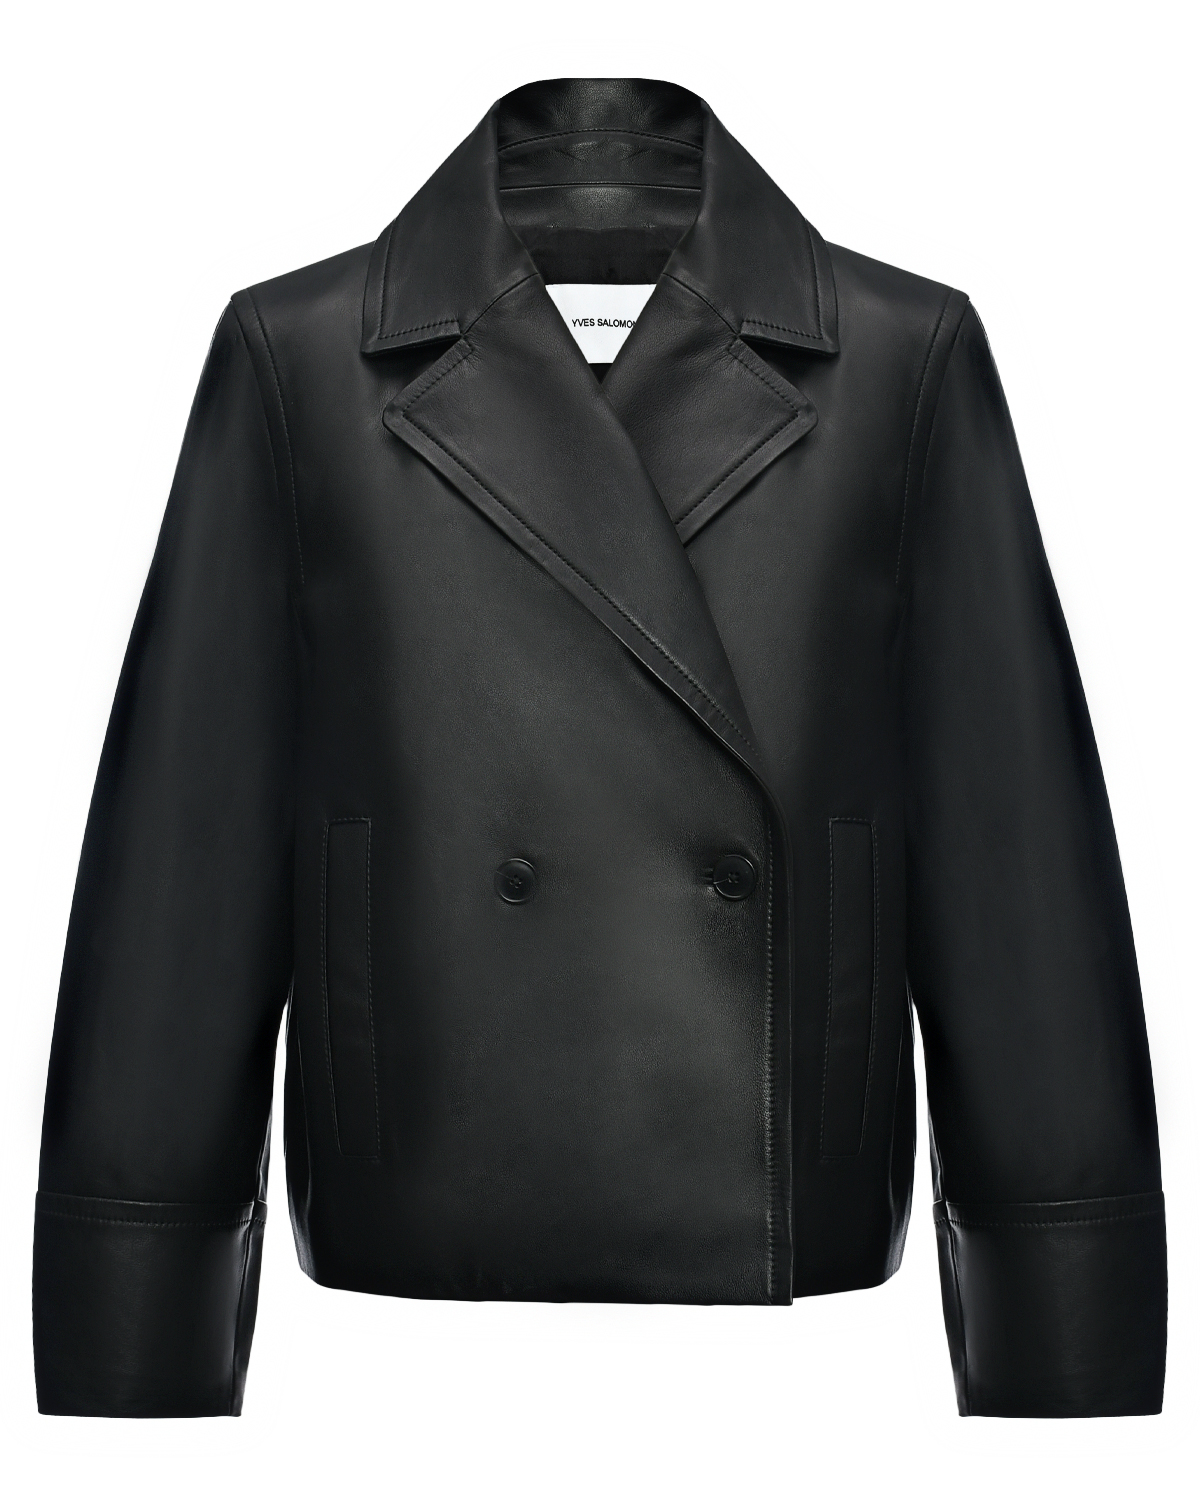 Двубортная кожаная куртка, черная Yves Salomon, размер 40, цвет черный